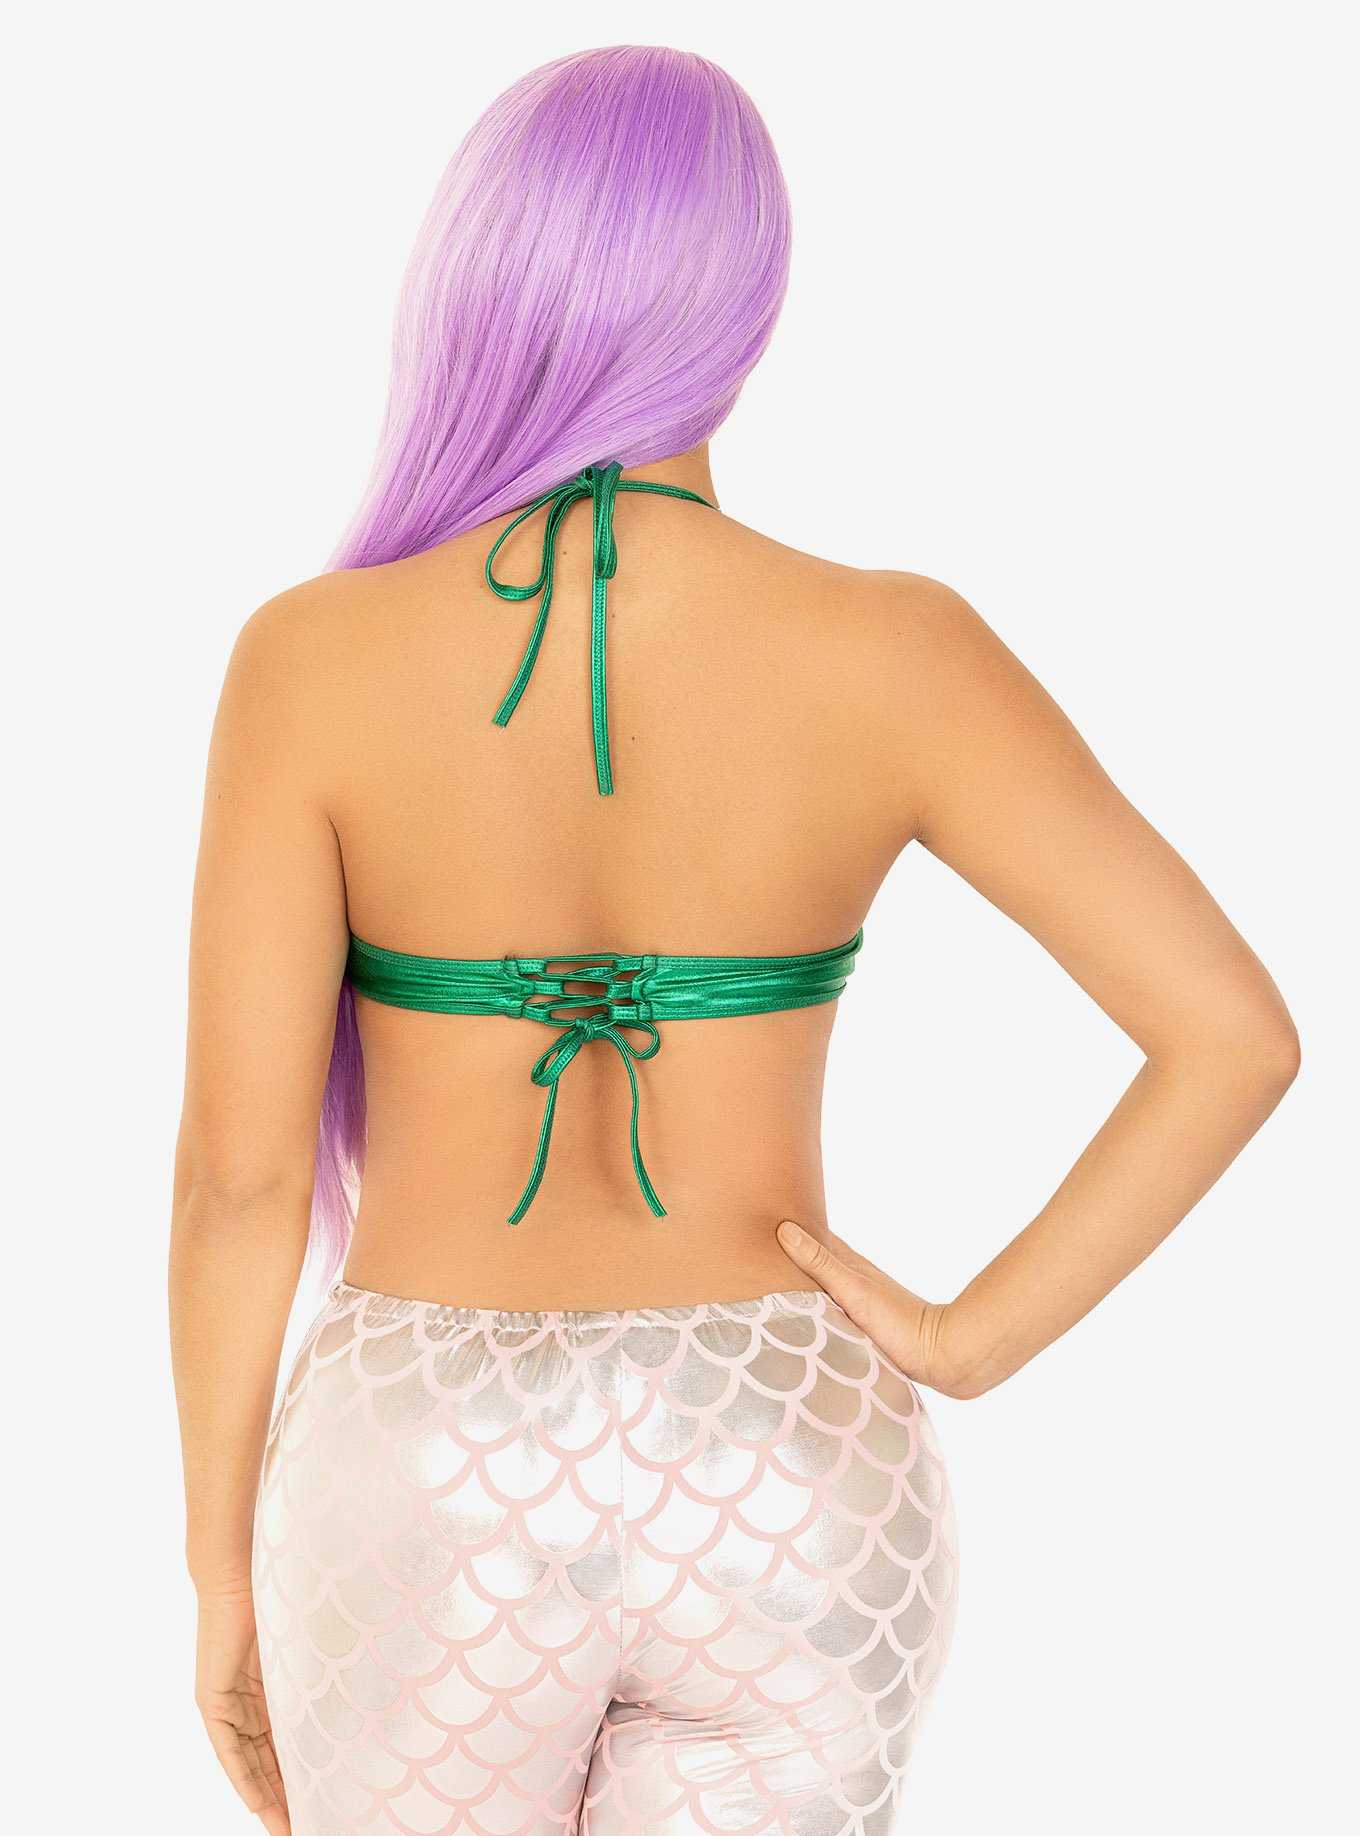 Mermaid Shell Bra Top Costume Green, , hi-res